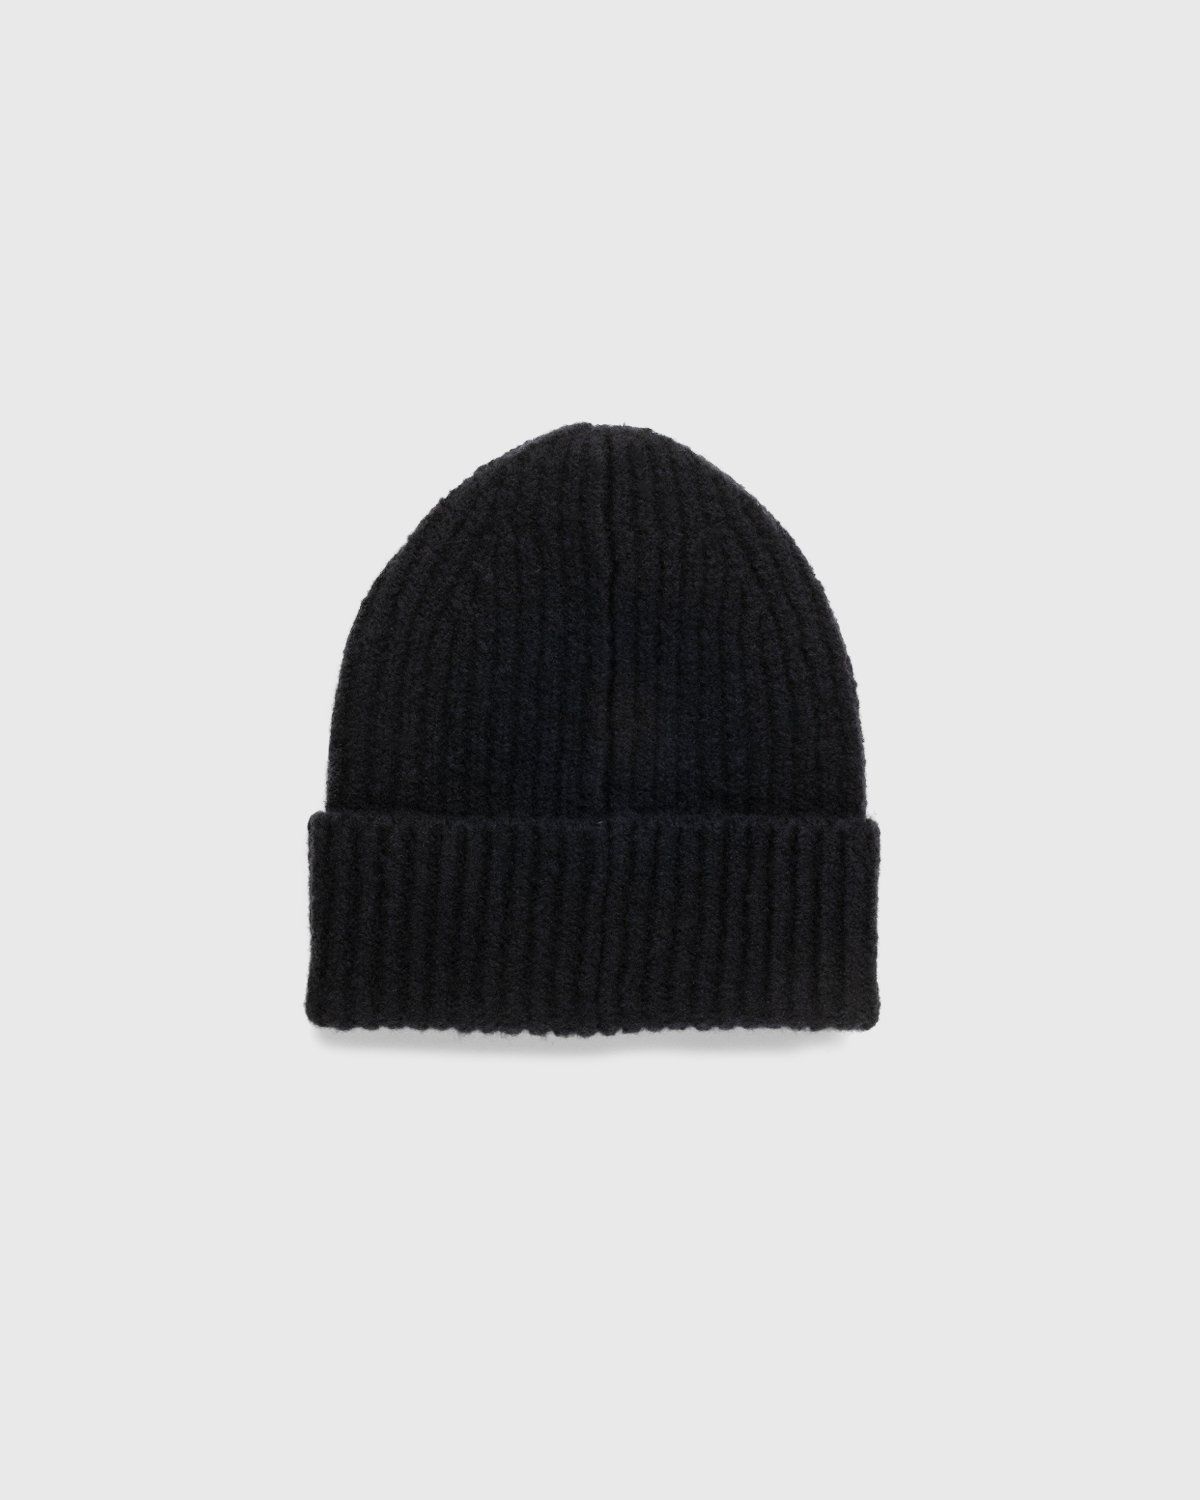 Acne Studios – Ribbed Wool Beanie Black - Hats - Black - Image 1